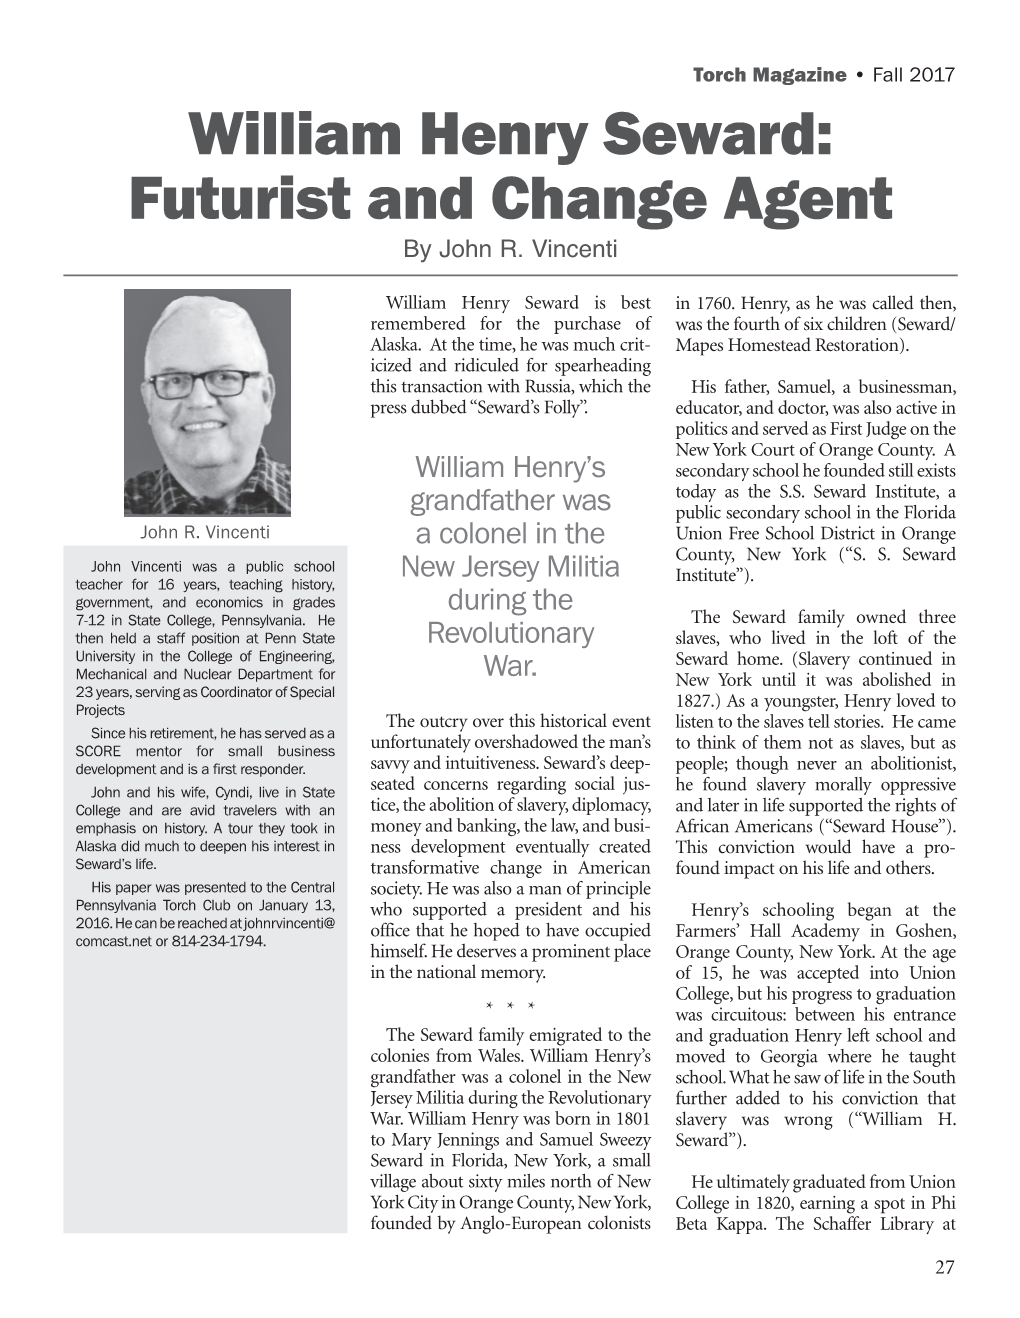 William Henry Seward: Futurist and Change Agent by John R